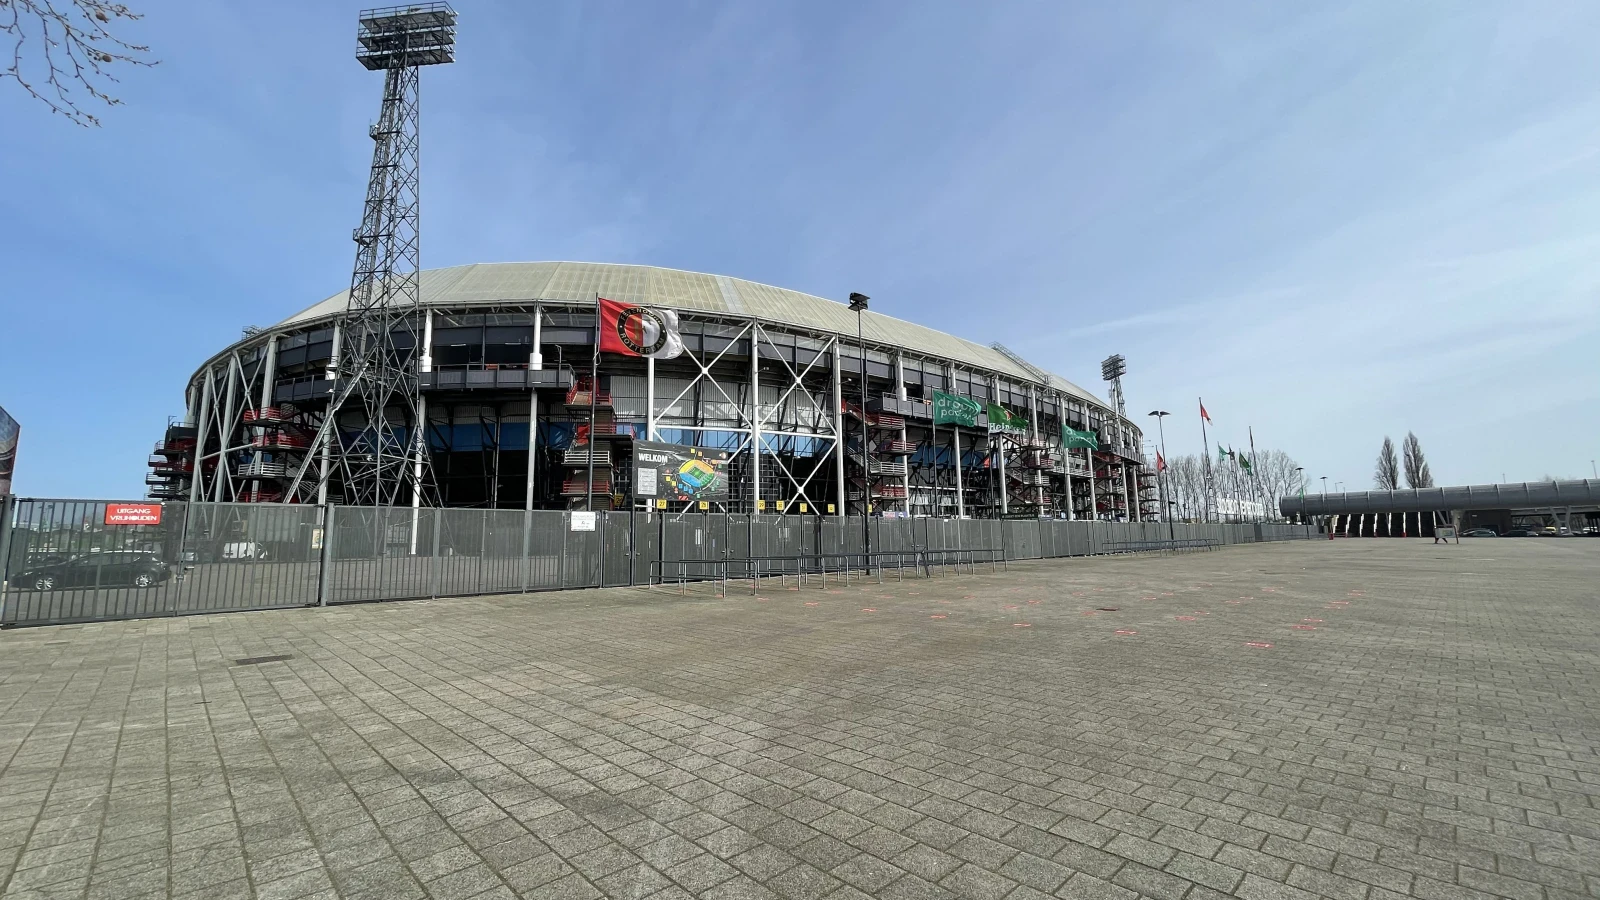 Sluit Feyenoord het seizoen in stijl af?